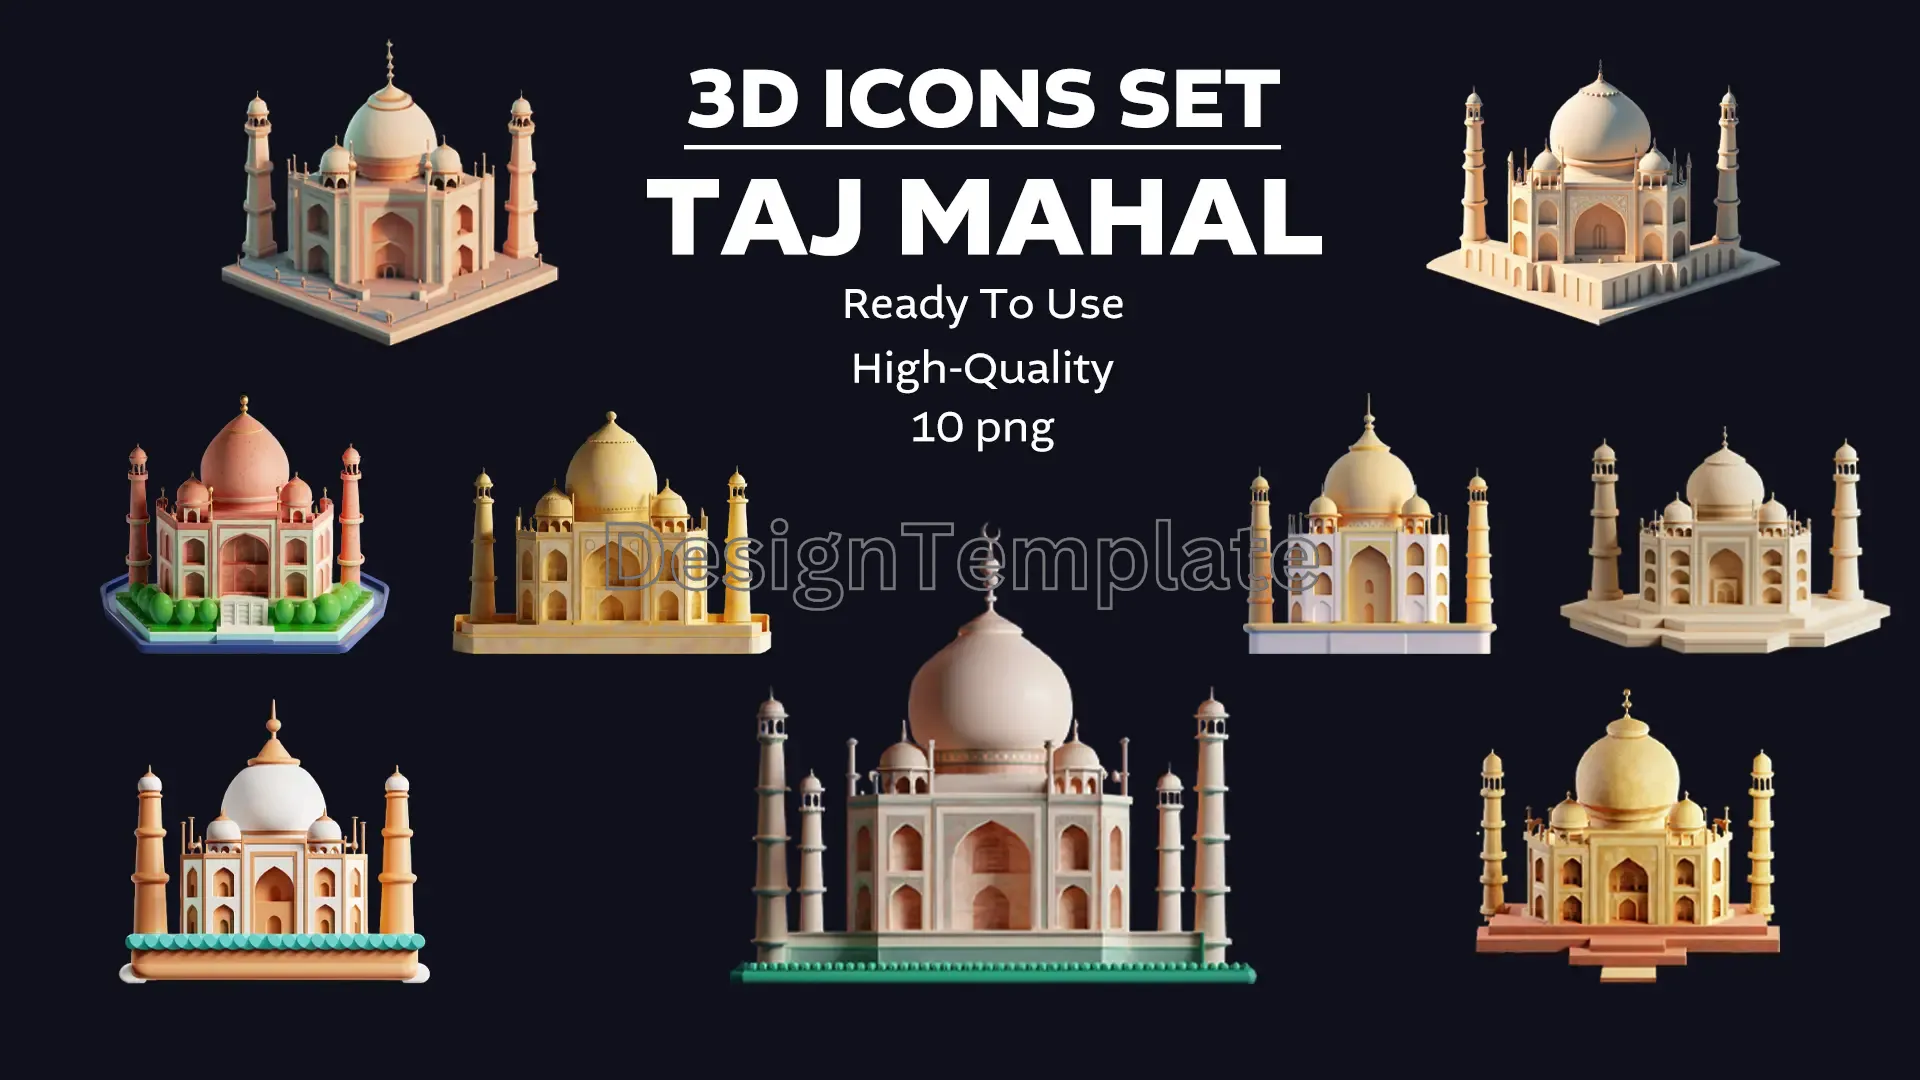 Architectural Marvel 3D Taj Mahal Set